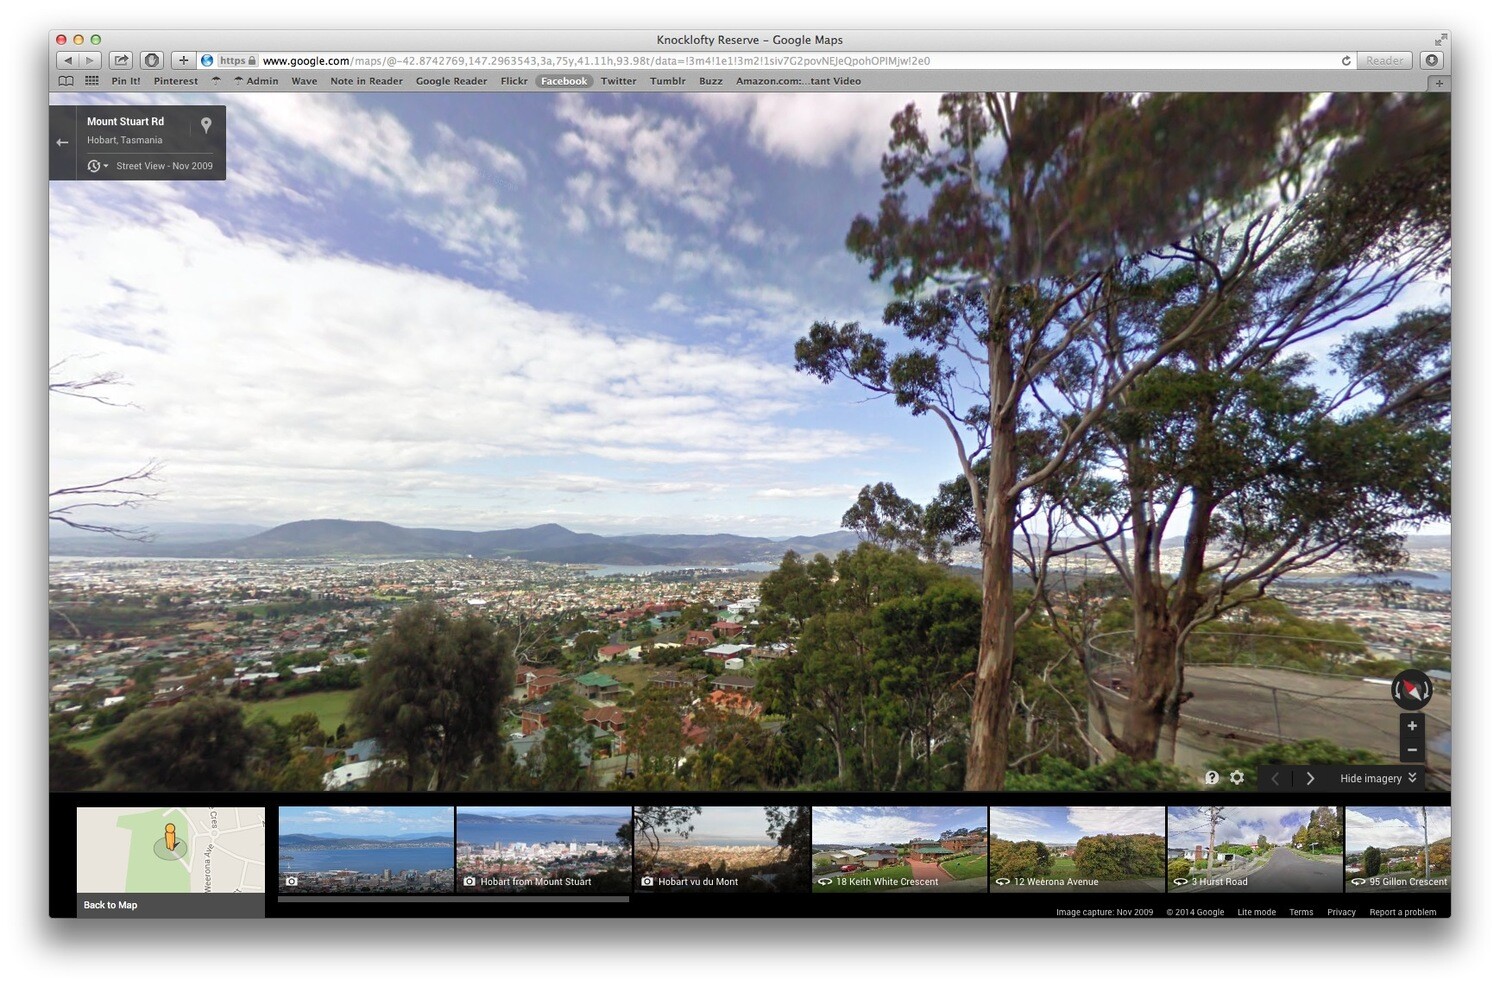 Original Google Streetview image.